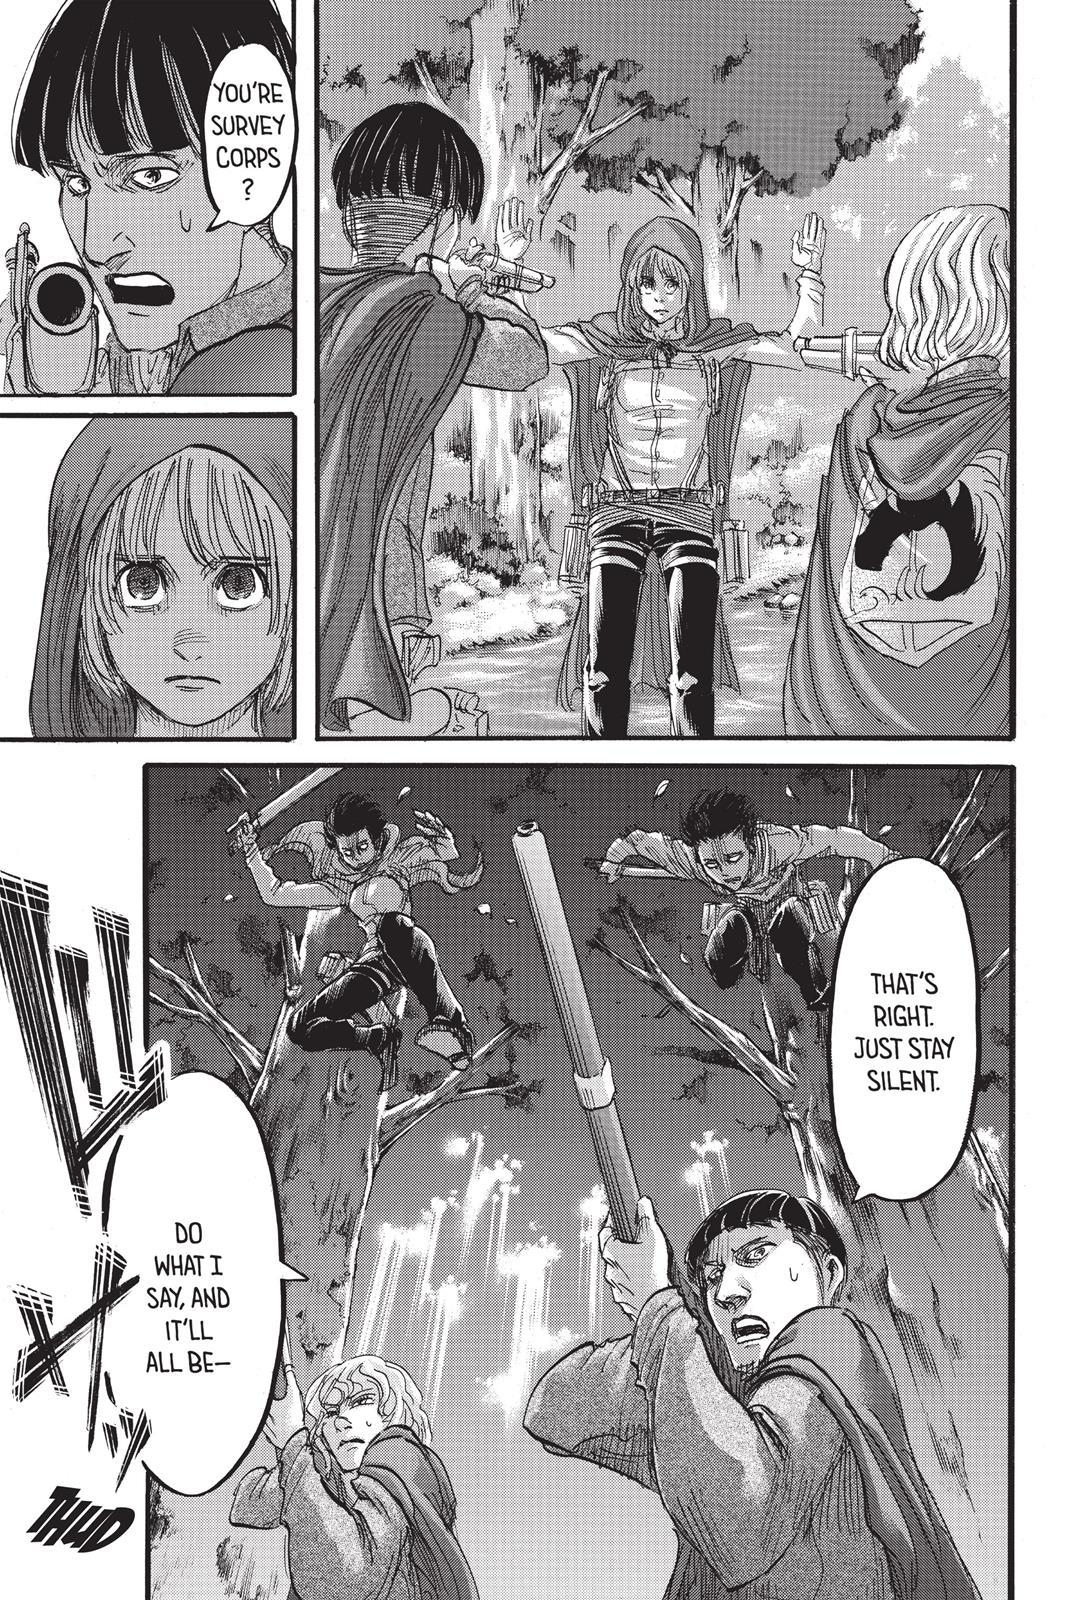 Shingeki No Kyojin Chapter 59 Page 28 Of 52 Attack On Titan Manga Online